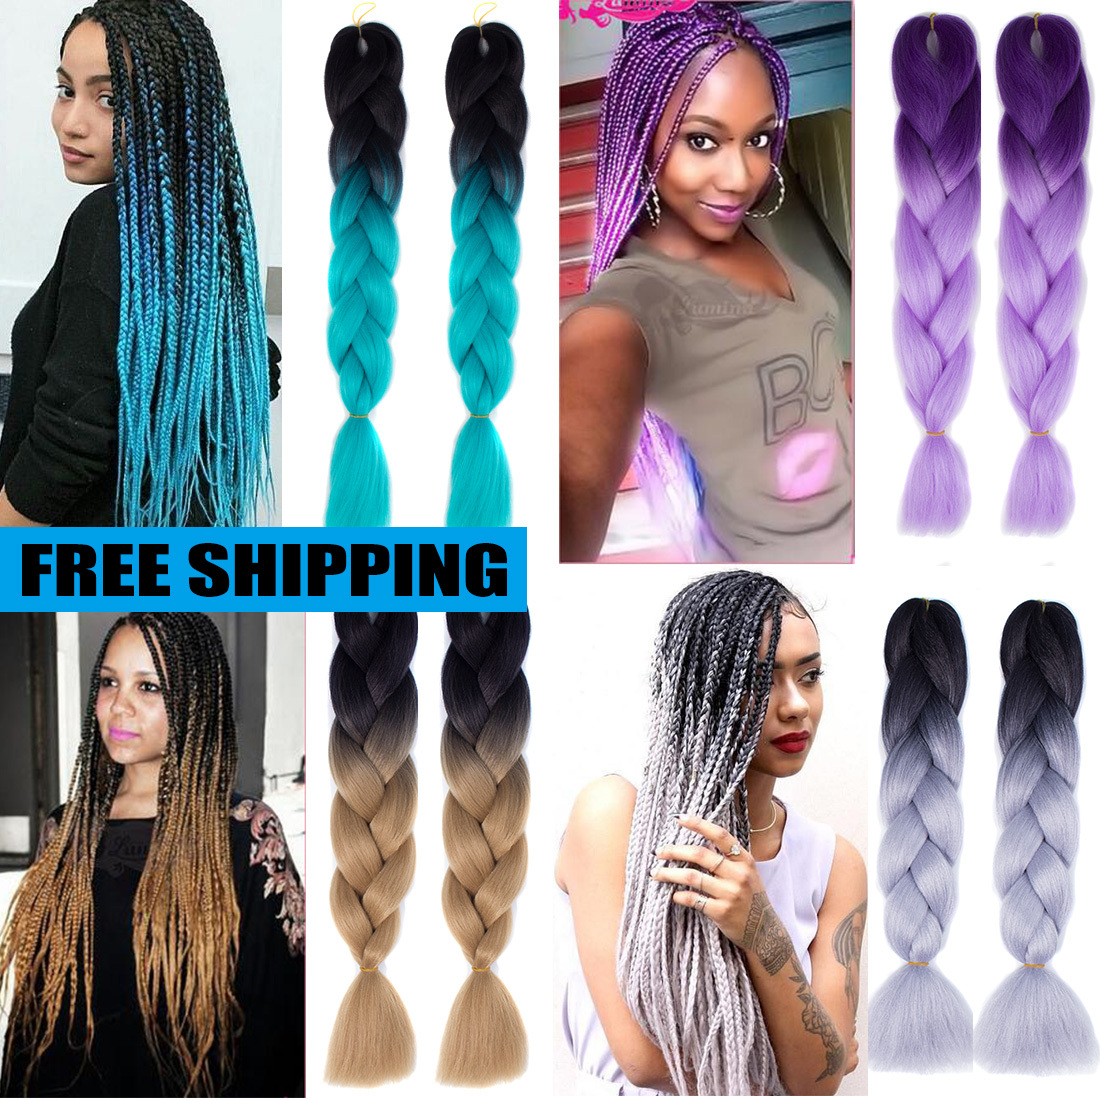 60 Colors Ombre Jumbo Braids Kanekalon Hair Extension 5 packs 24" Long Ponytail - $36.80